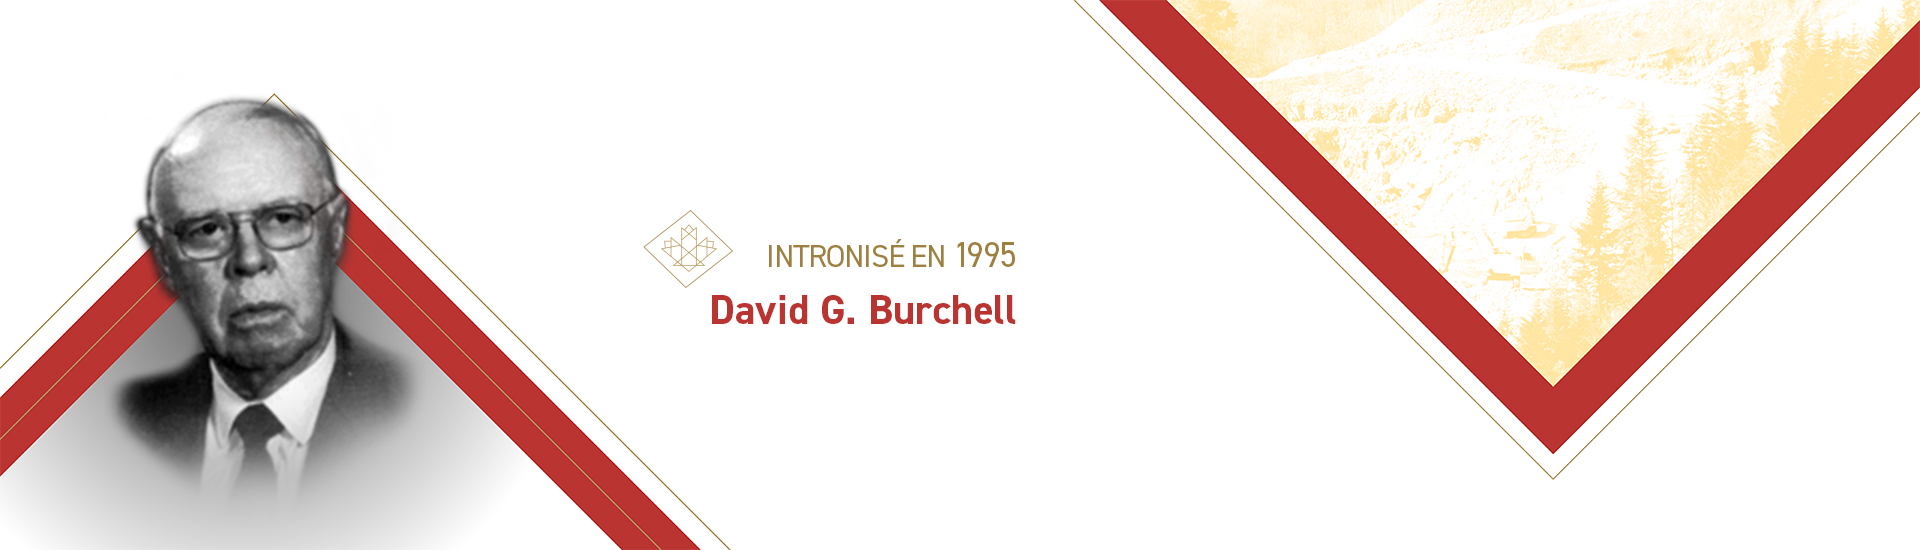 David G. Burchell (1909 – 1994)